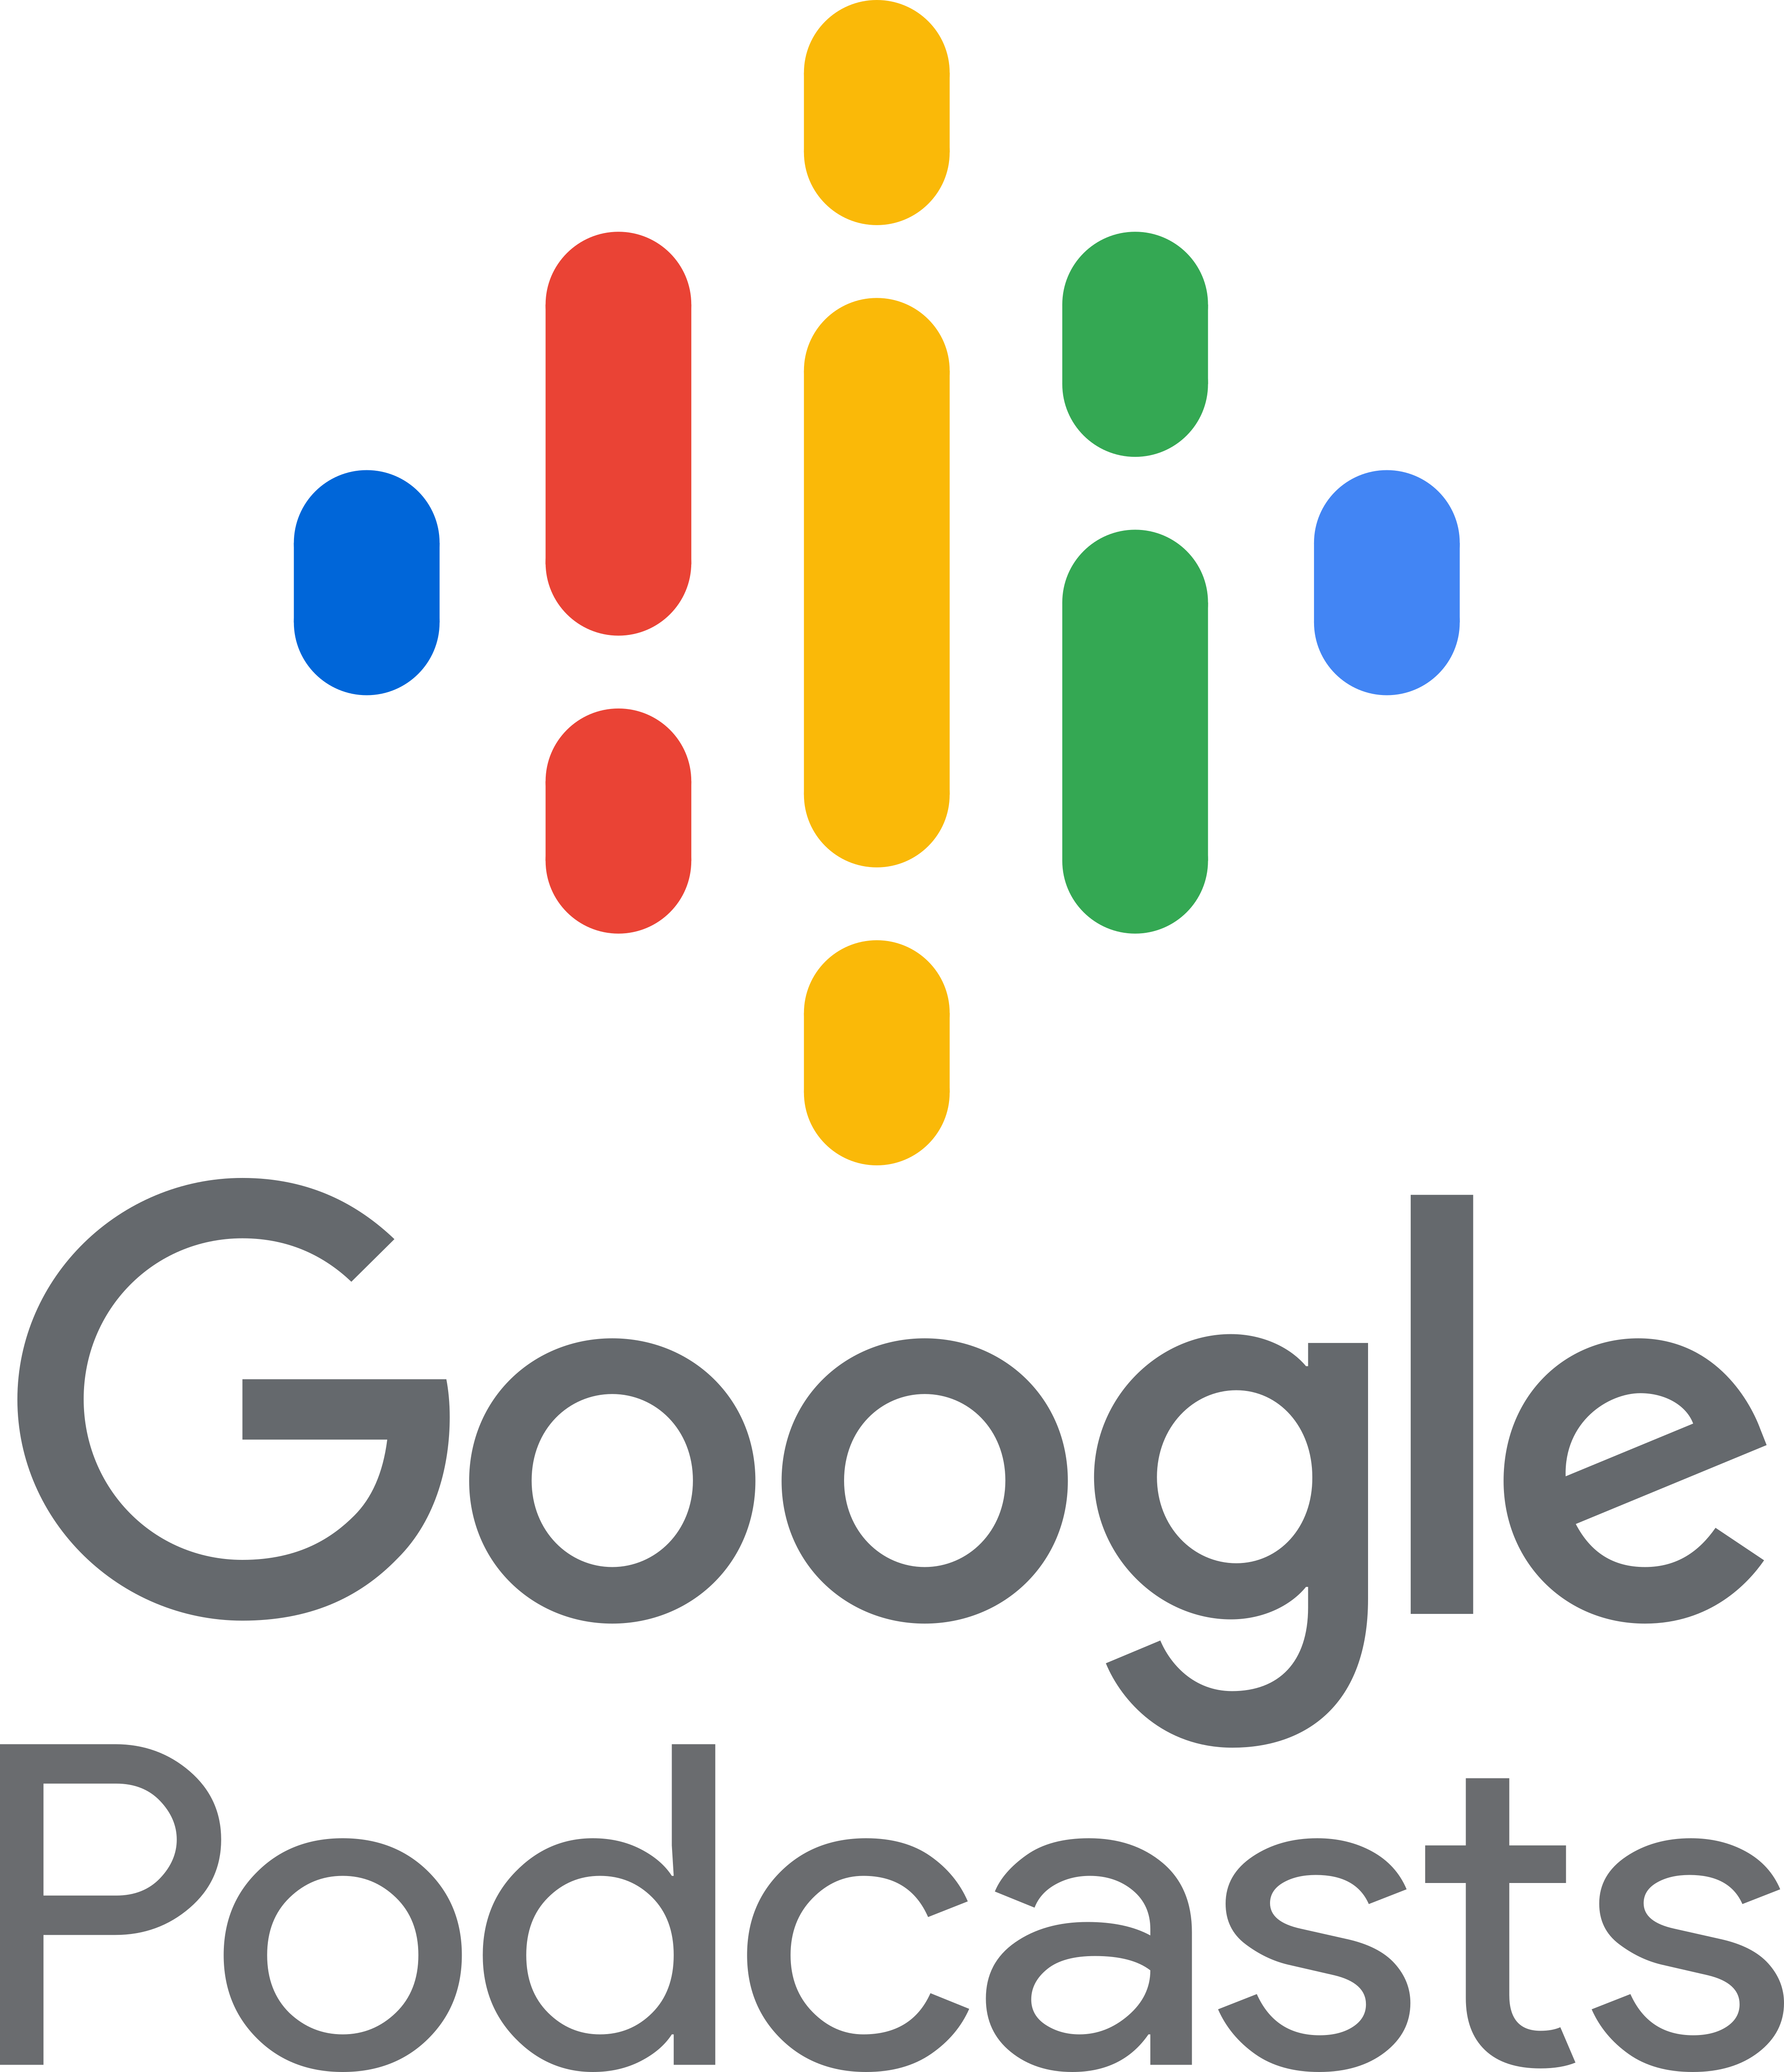 Google Podcasts Logo.